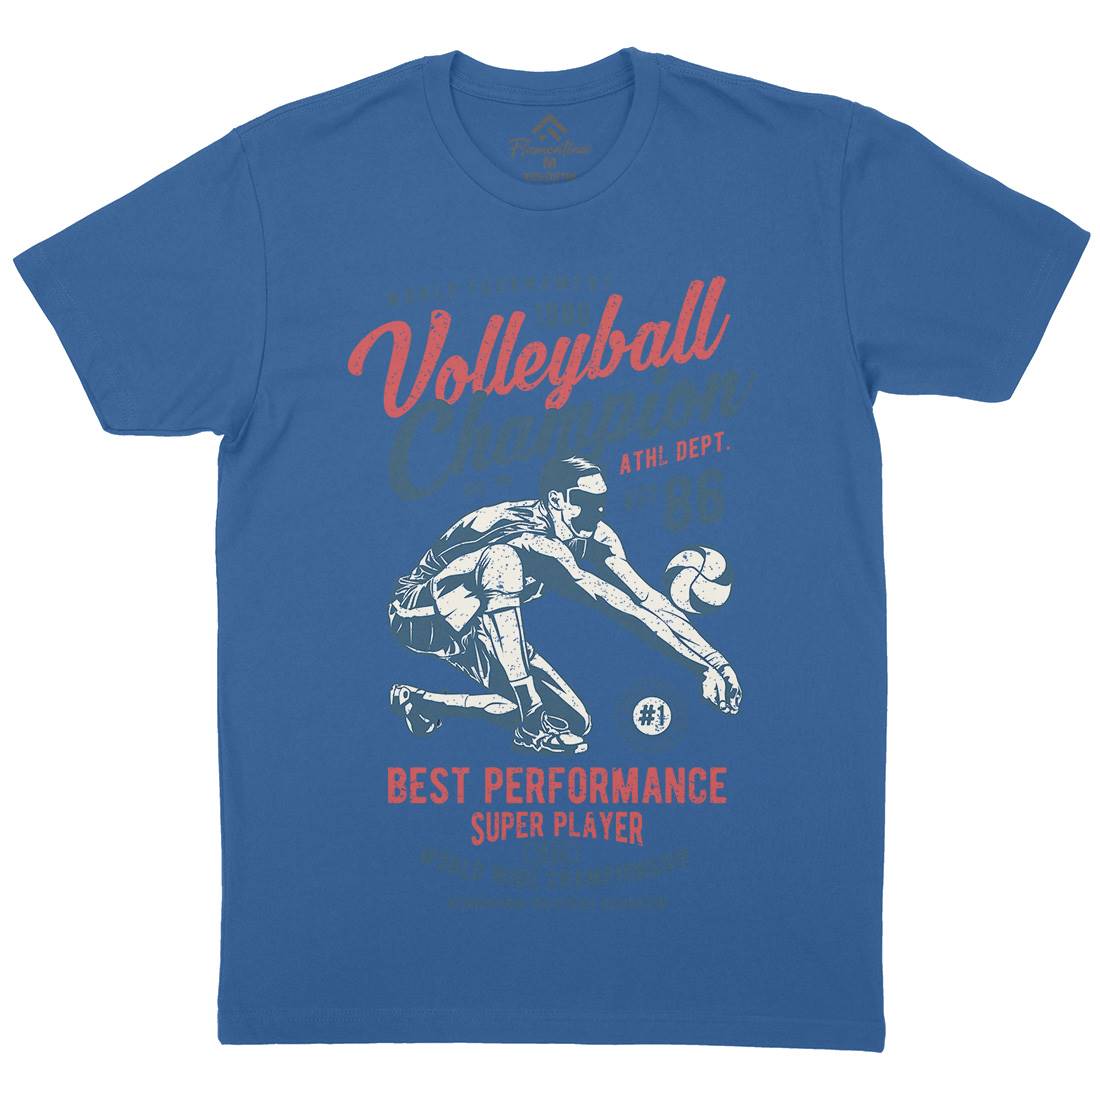 Volleyball Champion Mens Organic Crew Neck T-Shirt Sport A789